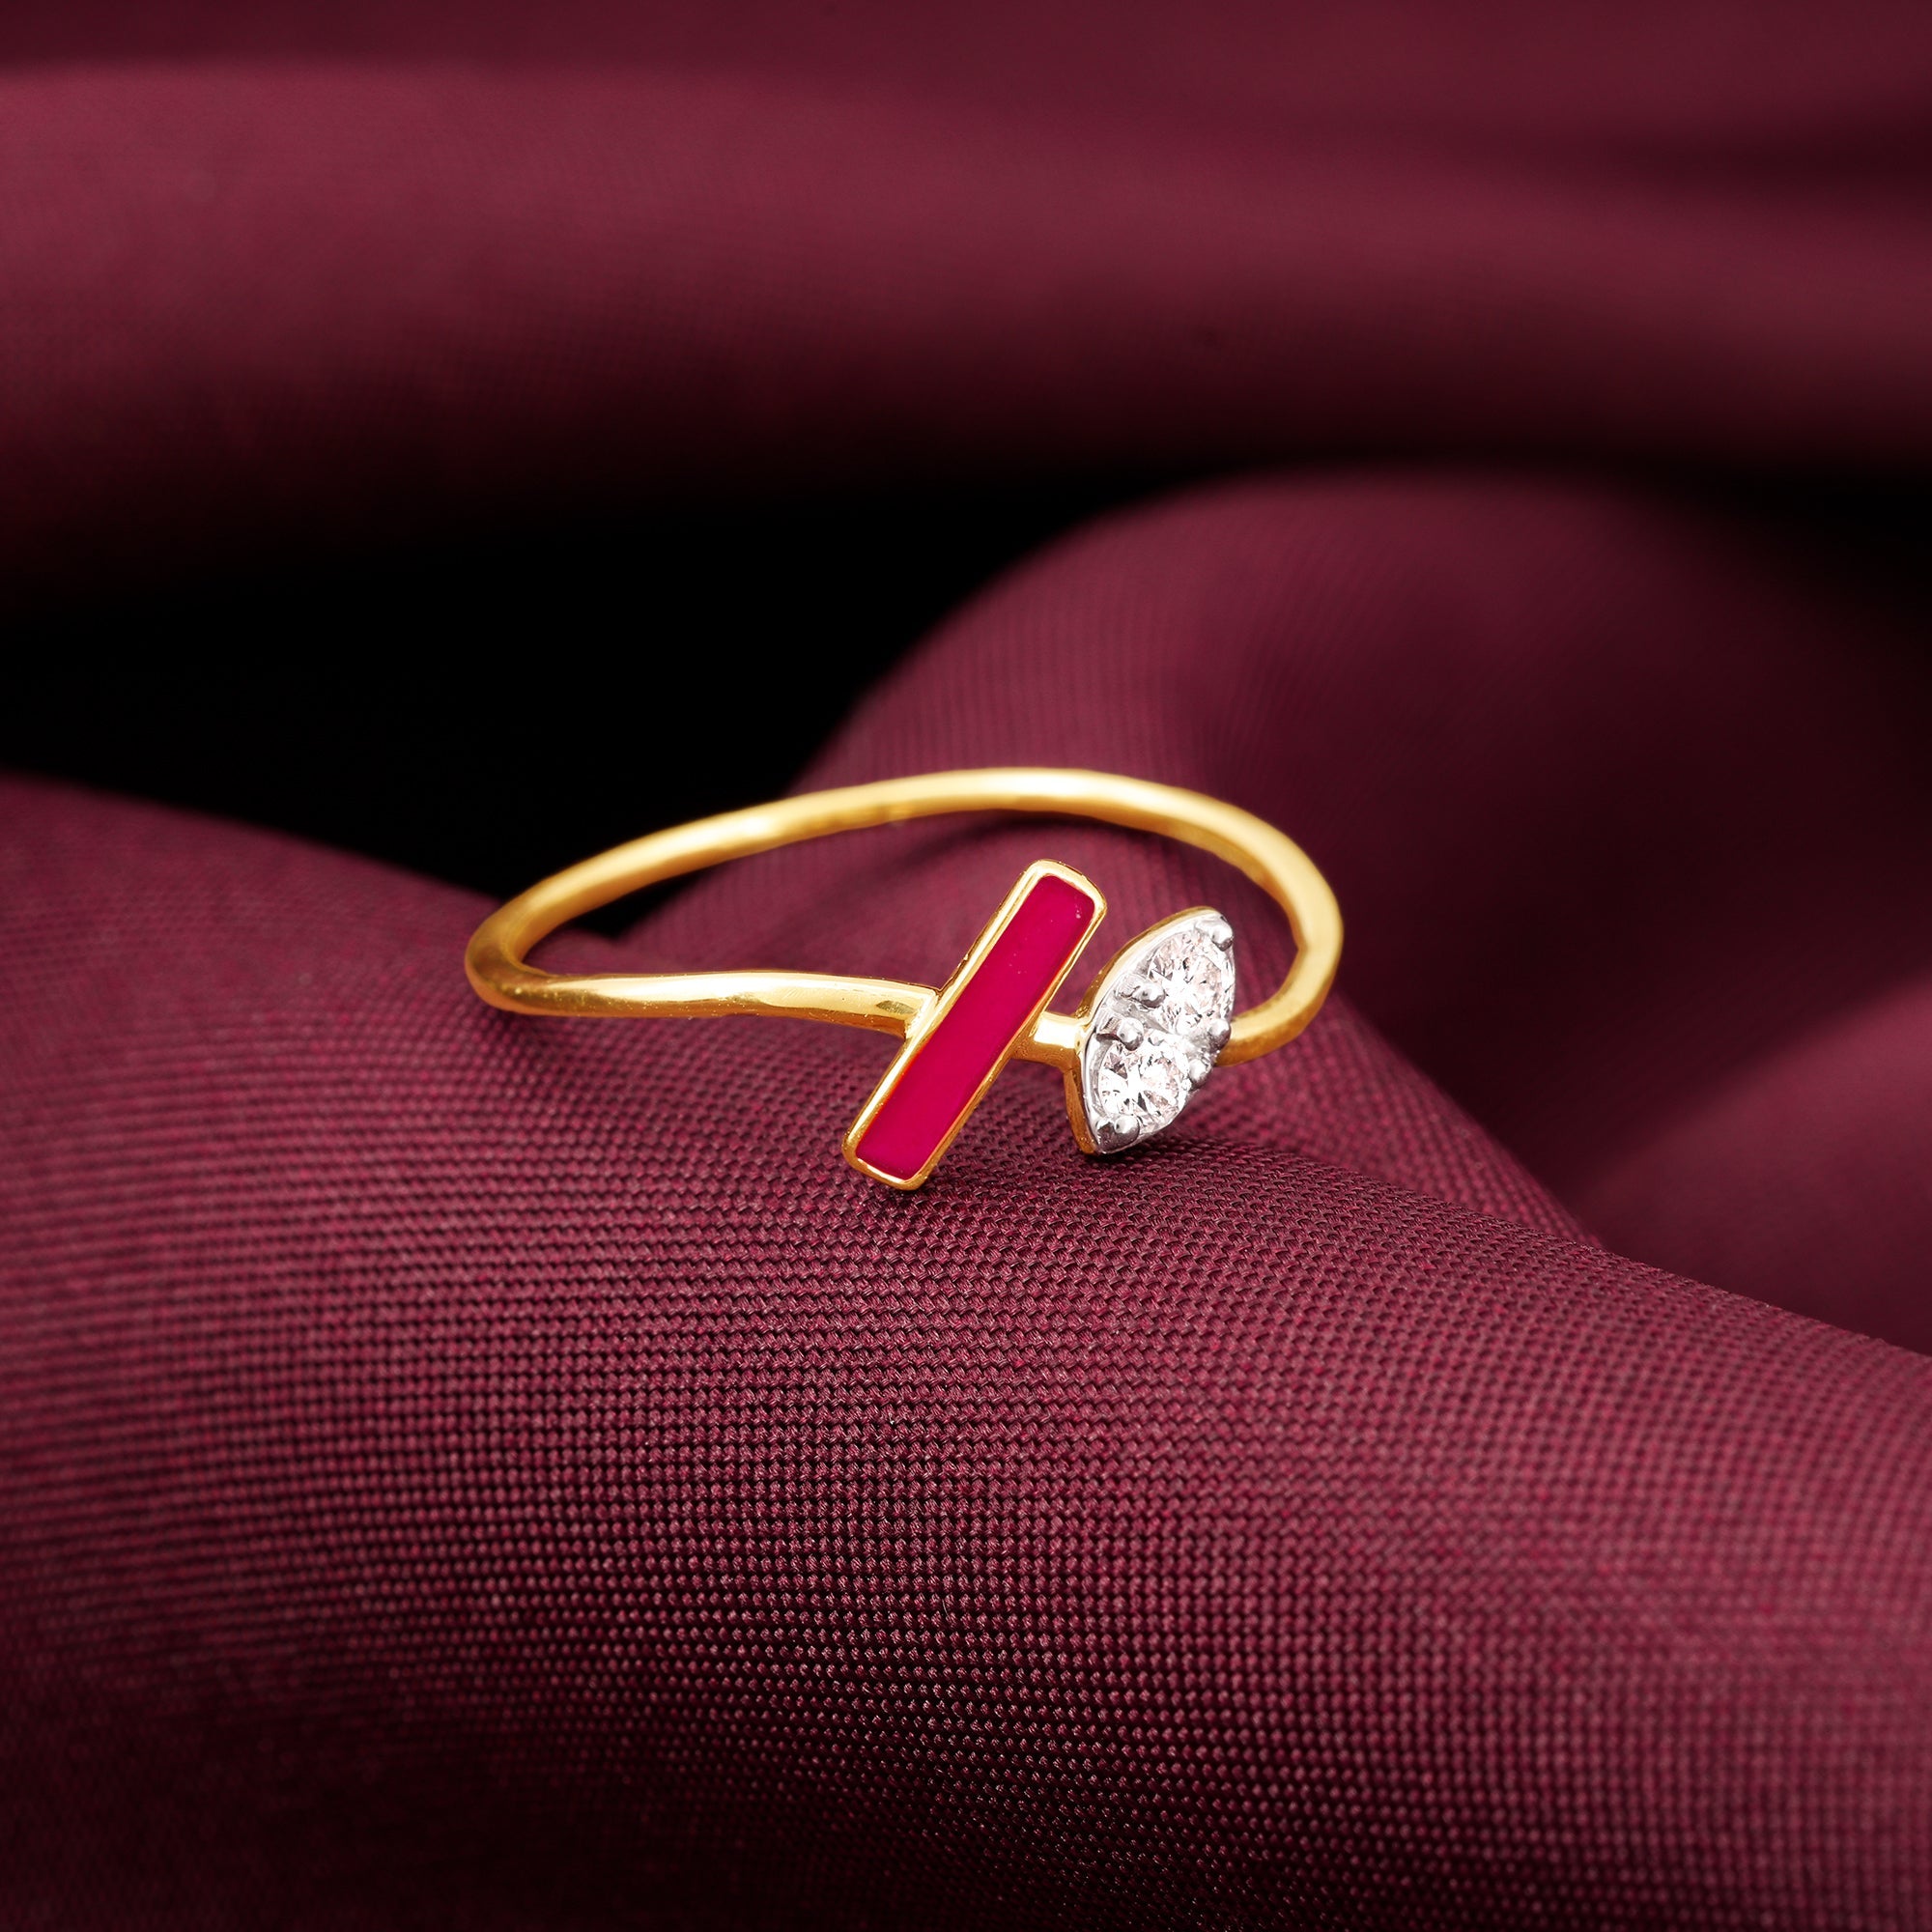 Bezel Oval Cut Black Diamond Wedding Band Gold Men's Engagement Ring | La  More Design